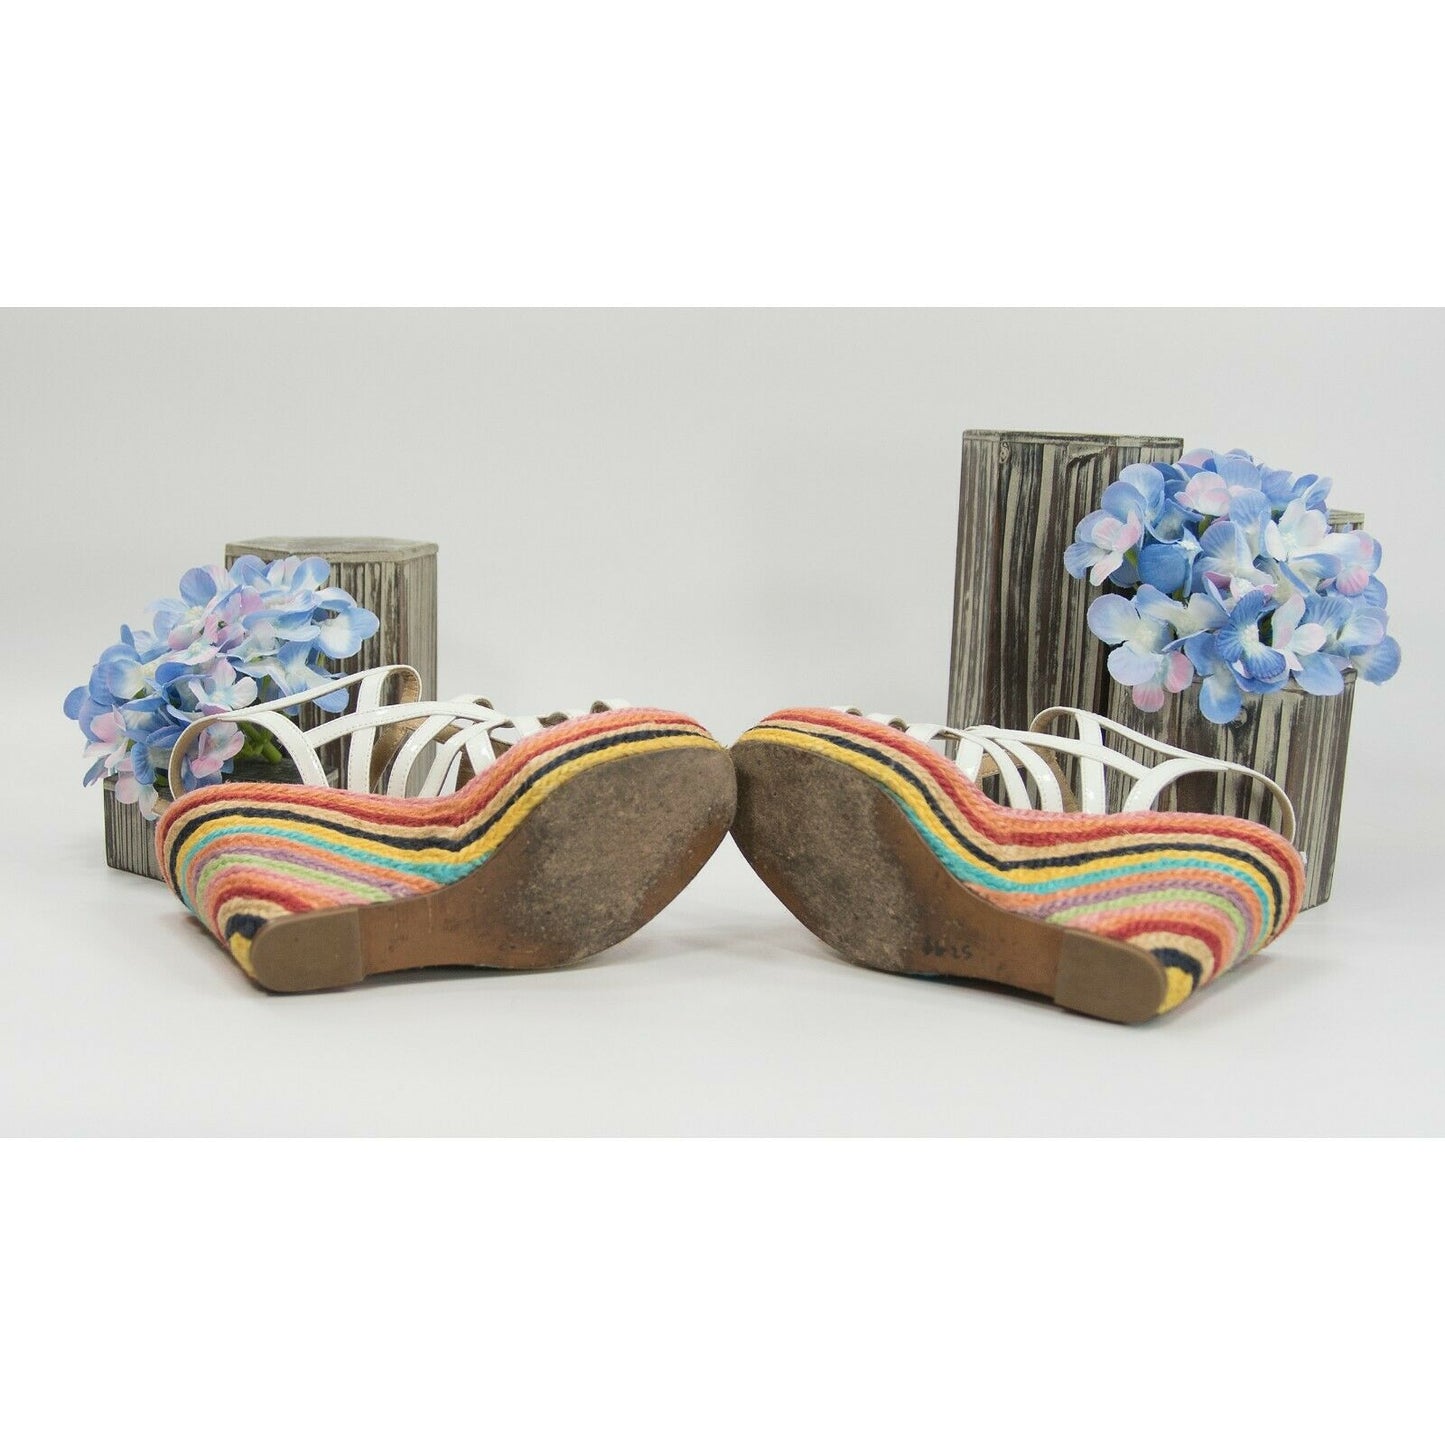 Paloma Barcelo White Patent Leather Rainbow Wedge Heels Shoes Sz 35 5